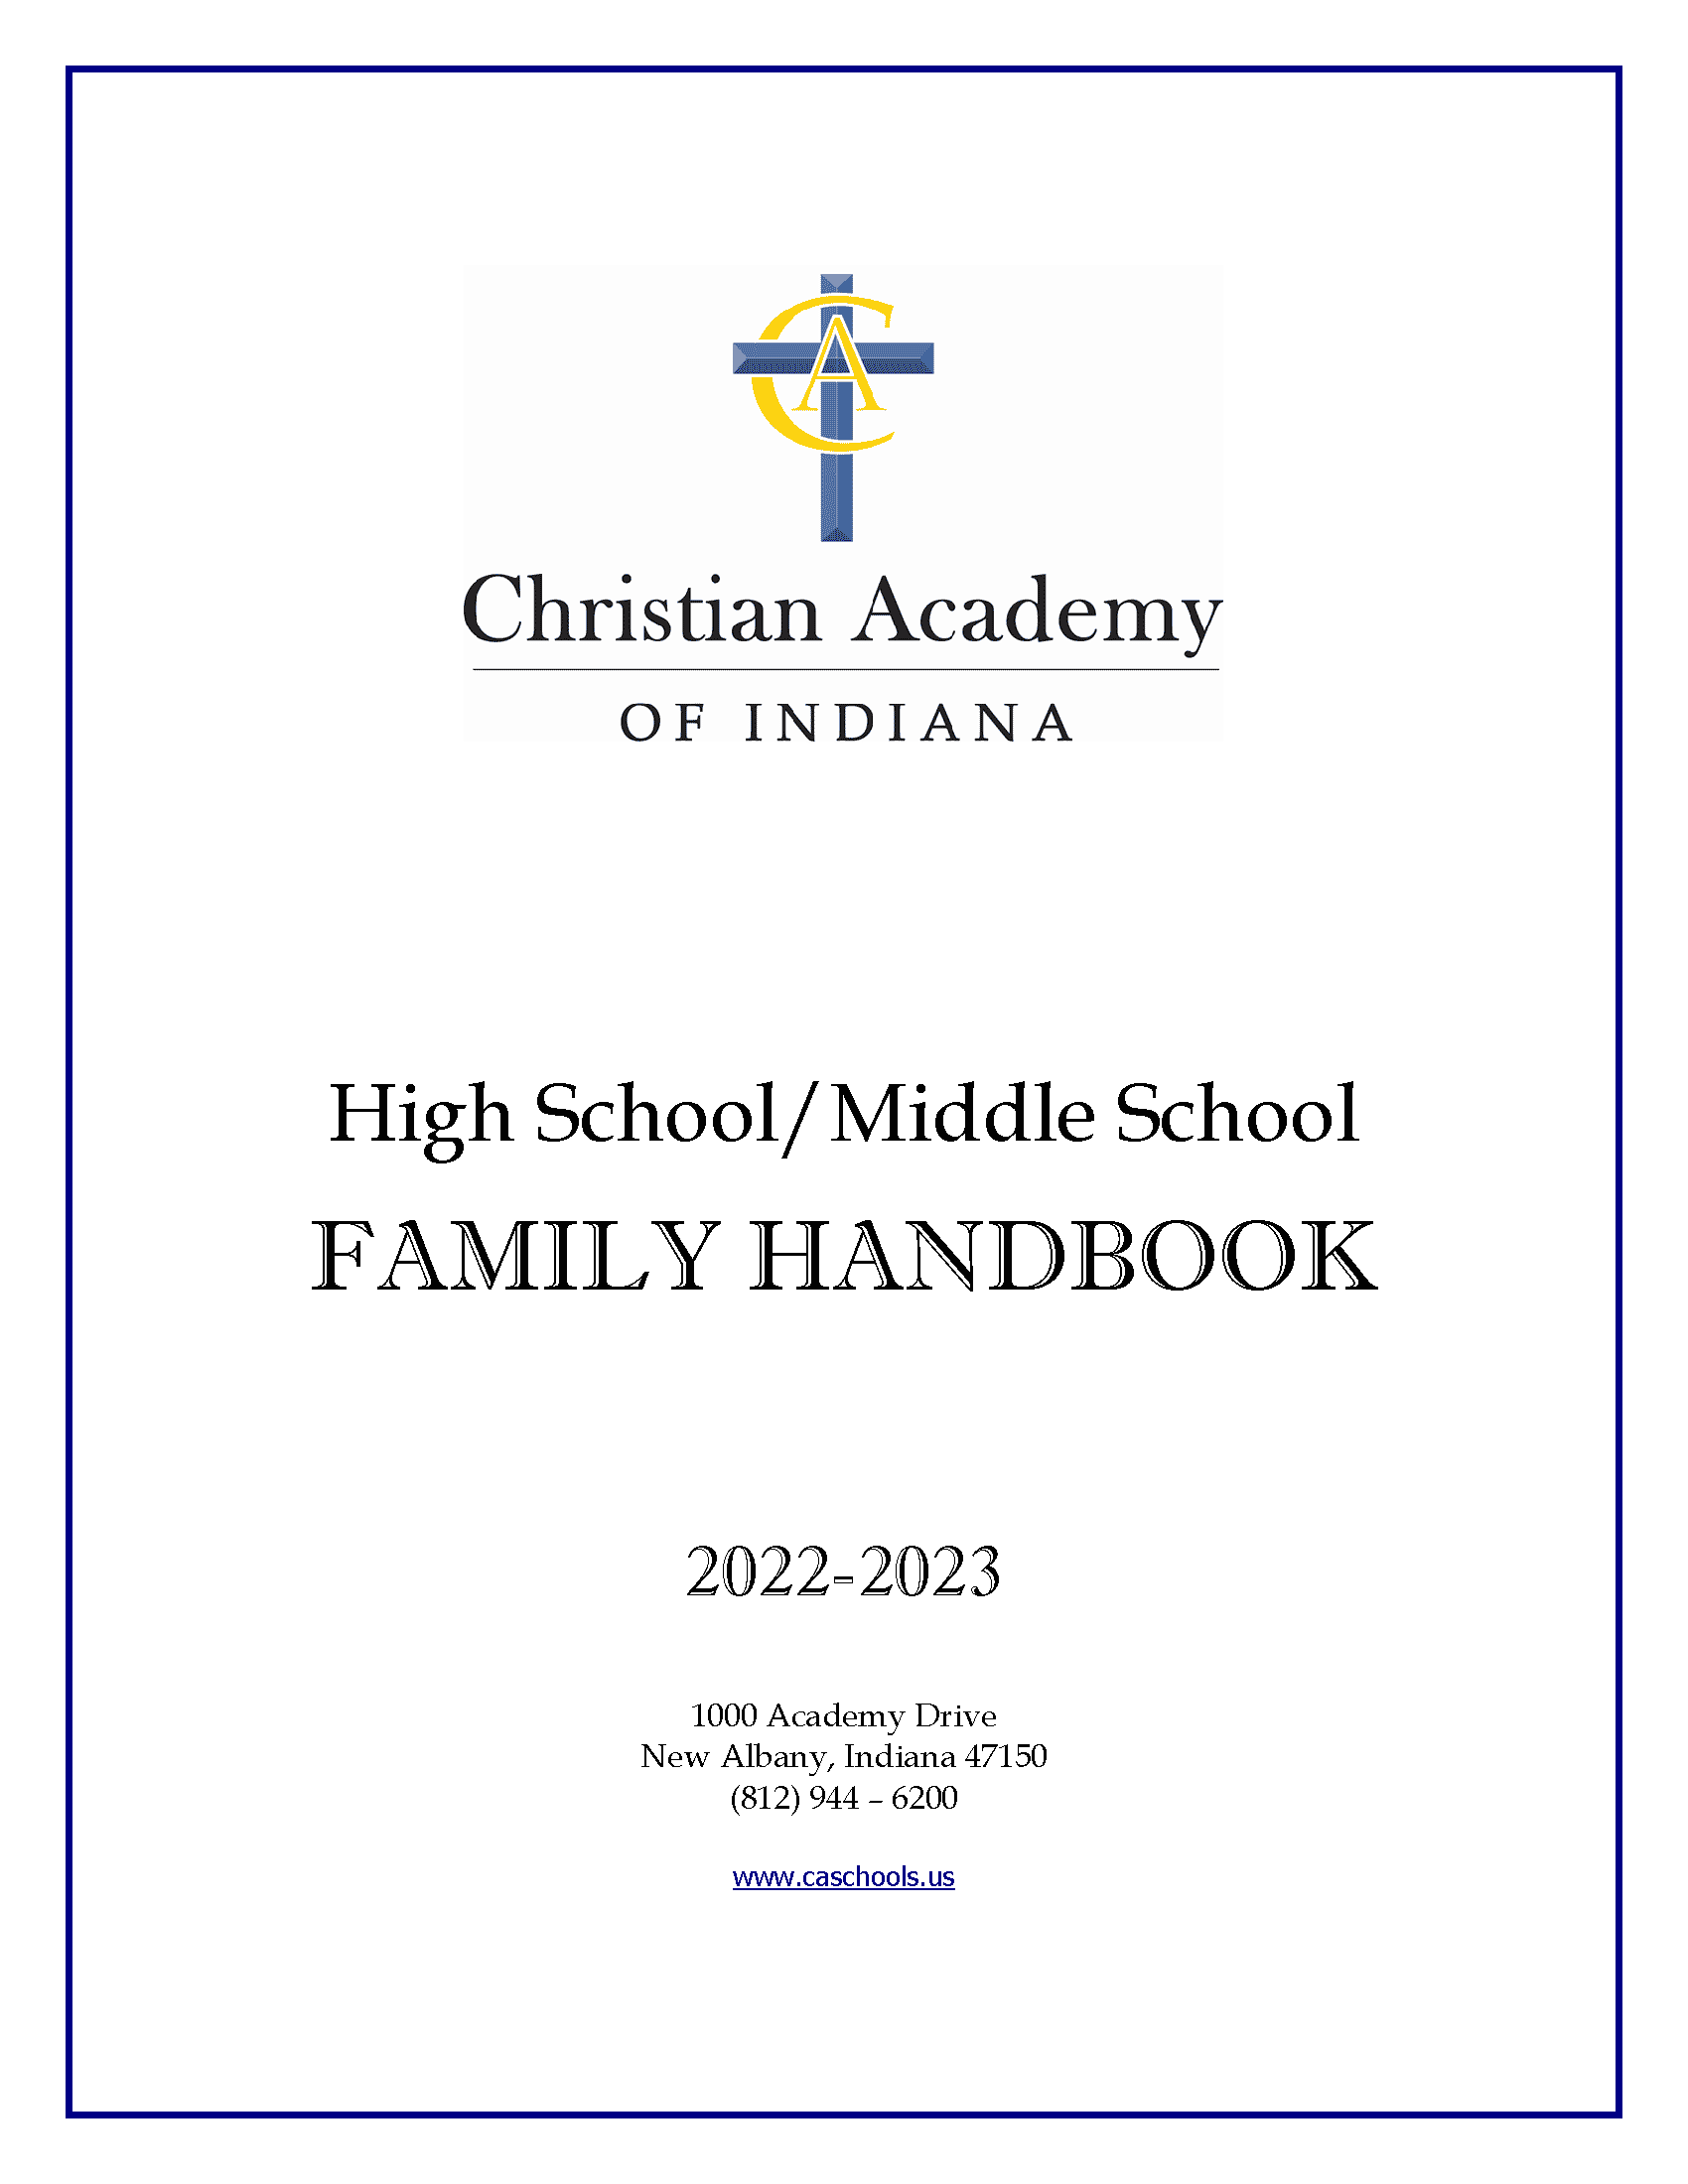 Christian Academy School System | Christian Academy of Indiana | High School / Middle School | 2022-2023 Family Handbook